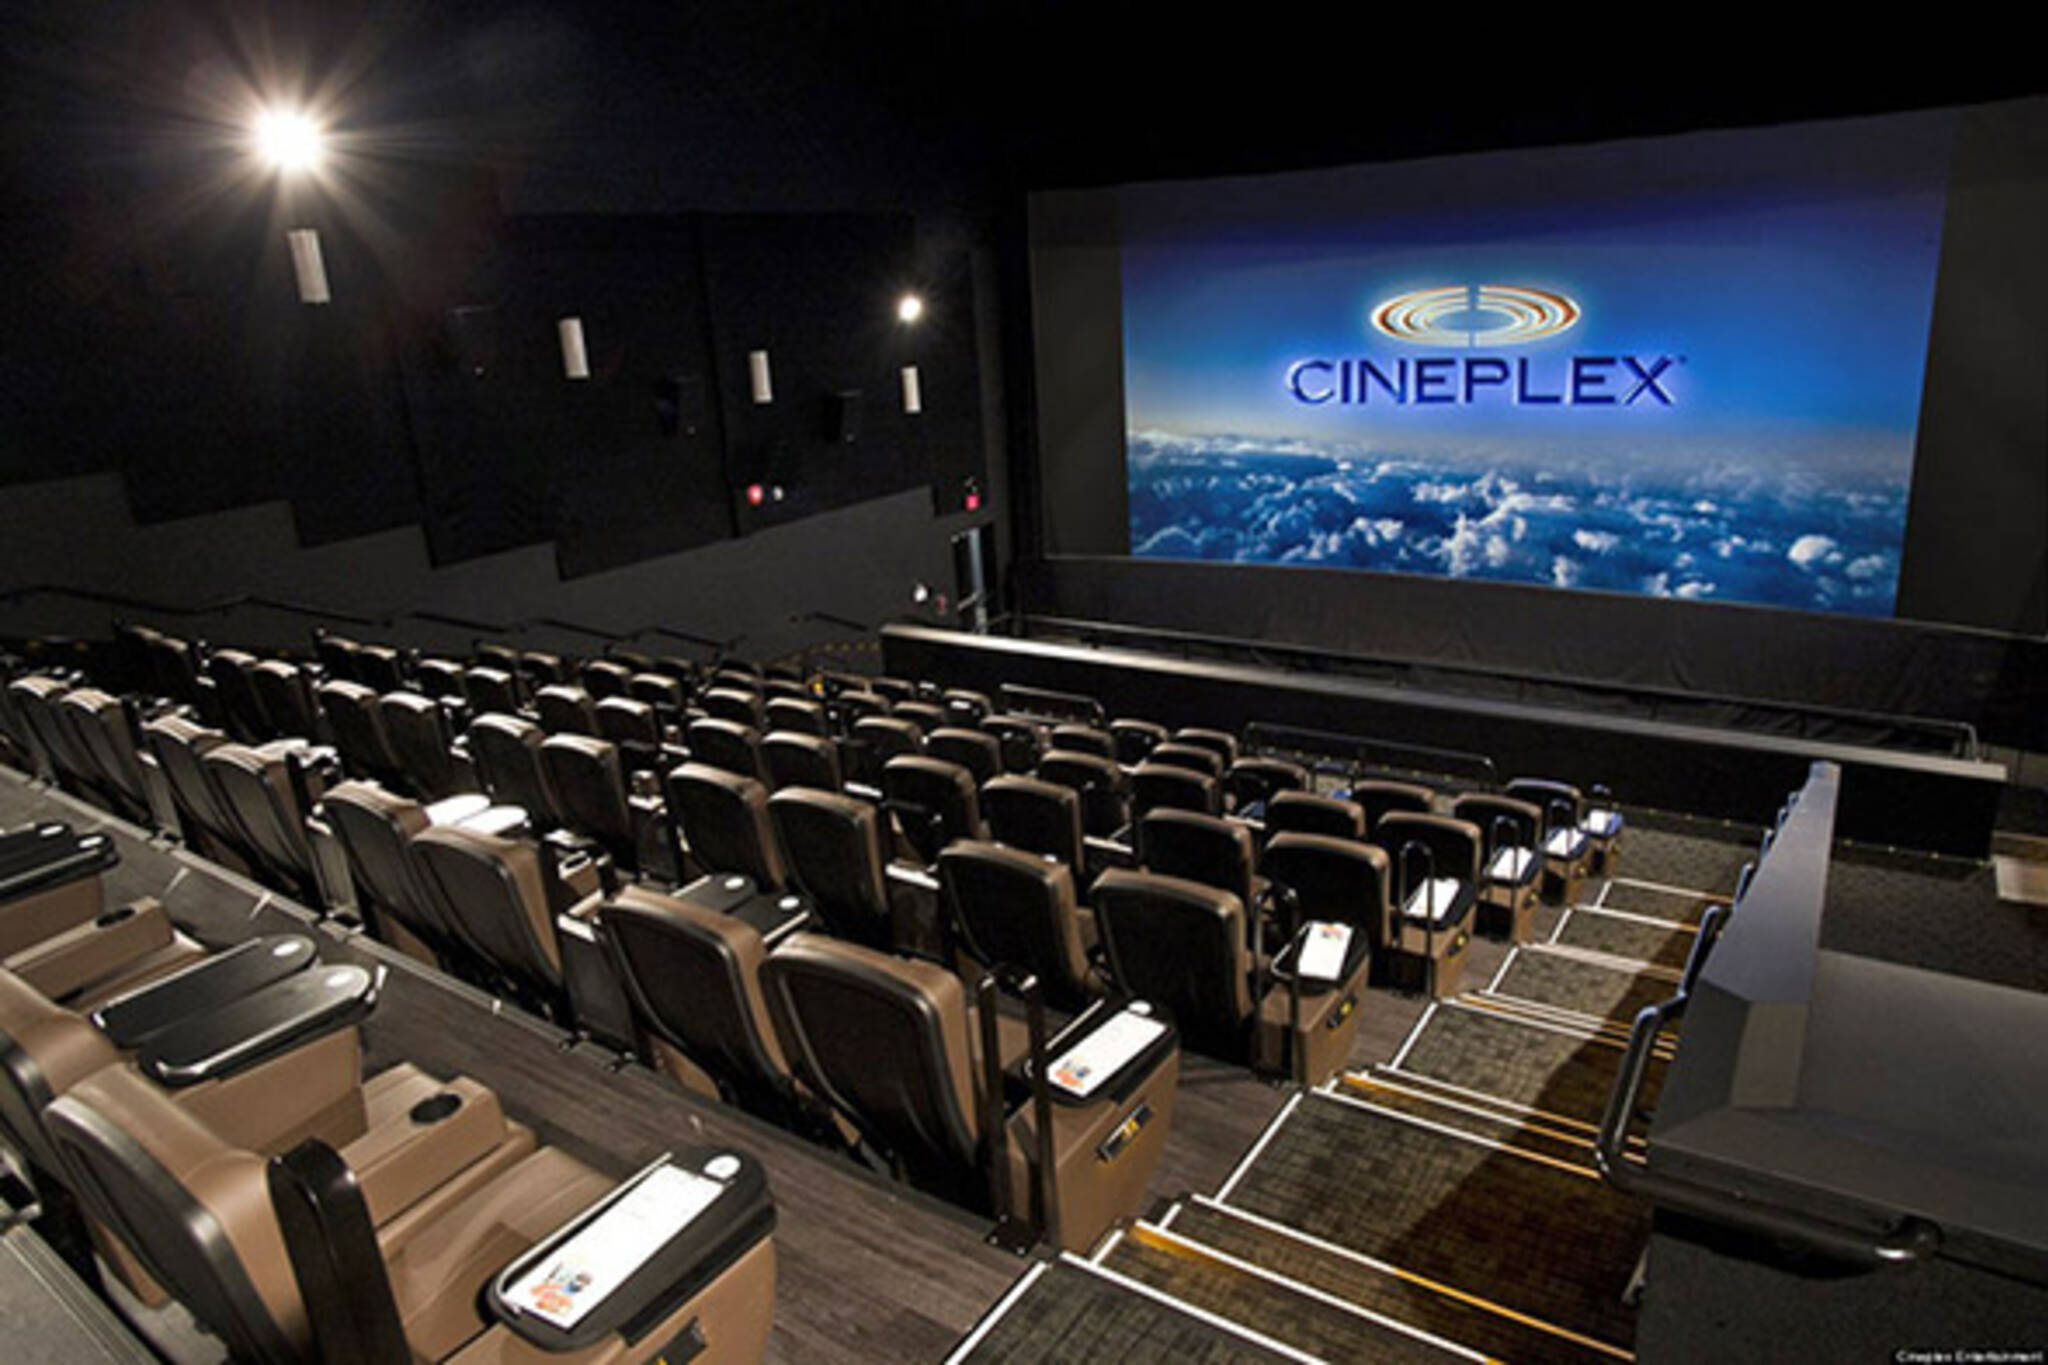 Cineplex reducing drink sizes at Toronto movie theatres